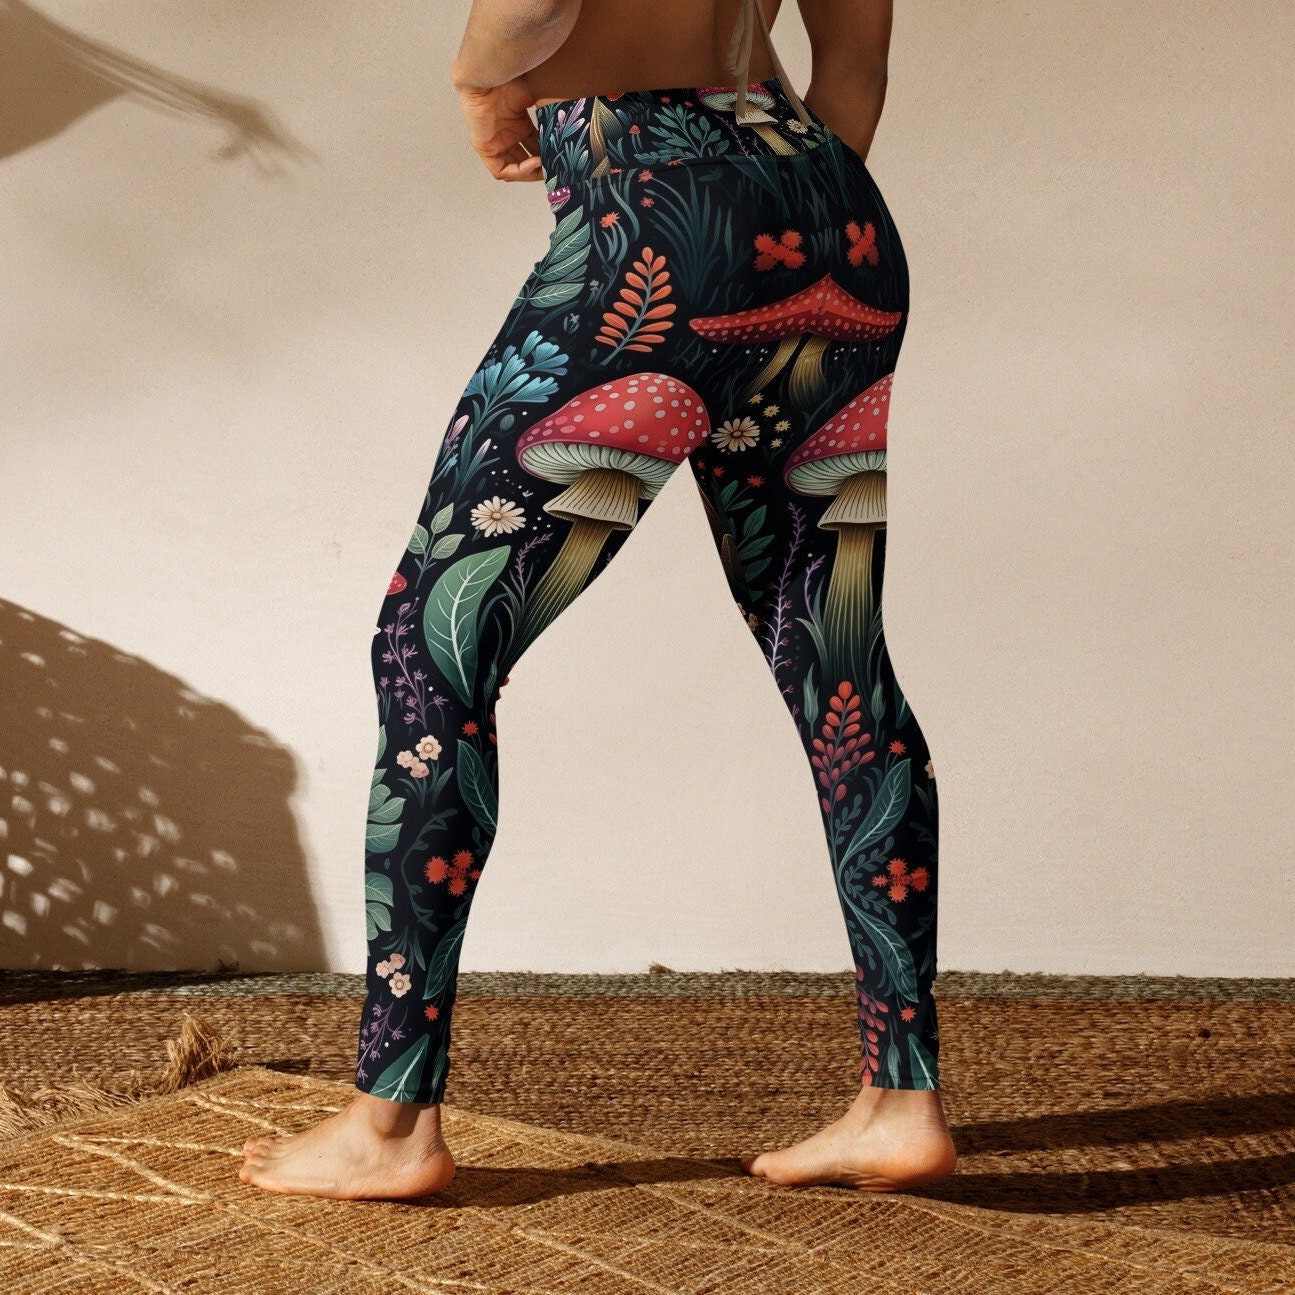 Leggings for Women Yoga Pants Hiking Track Travel Tights Athletic